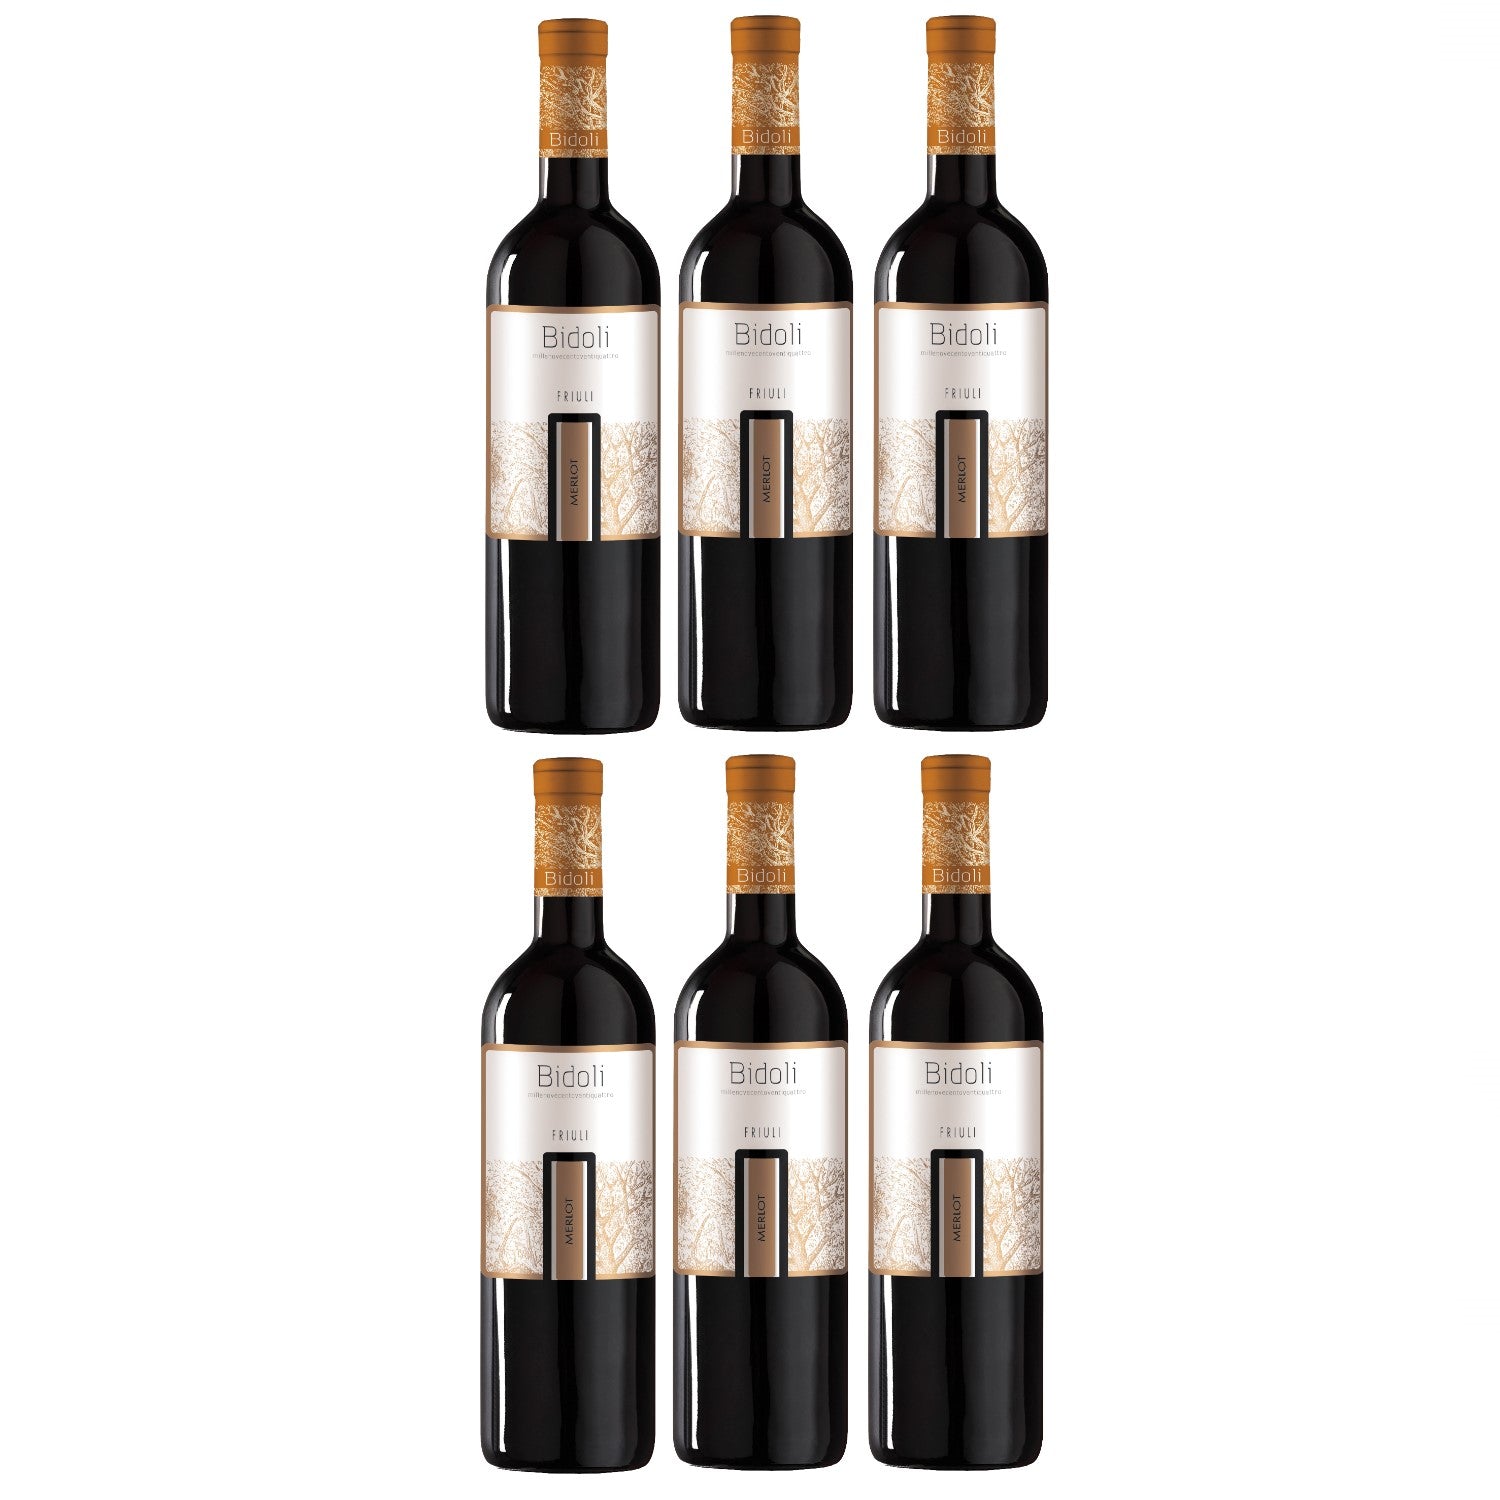 Bidoli Vini Merlot DOC Friuli Grave Rotwein Wein trocken Italien (6 x 0.75l) - Versanel -